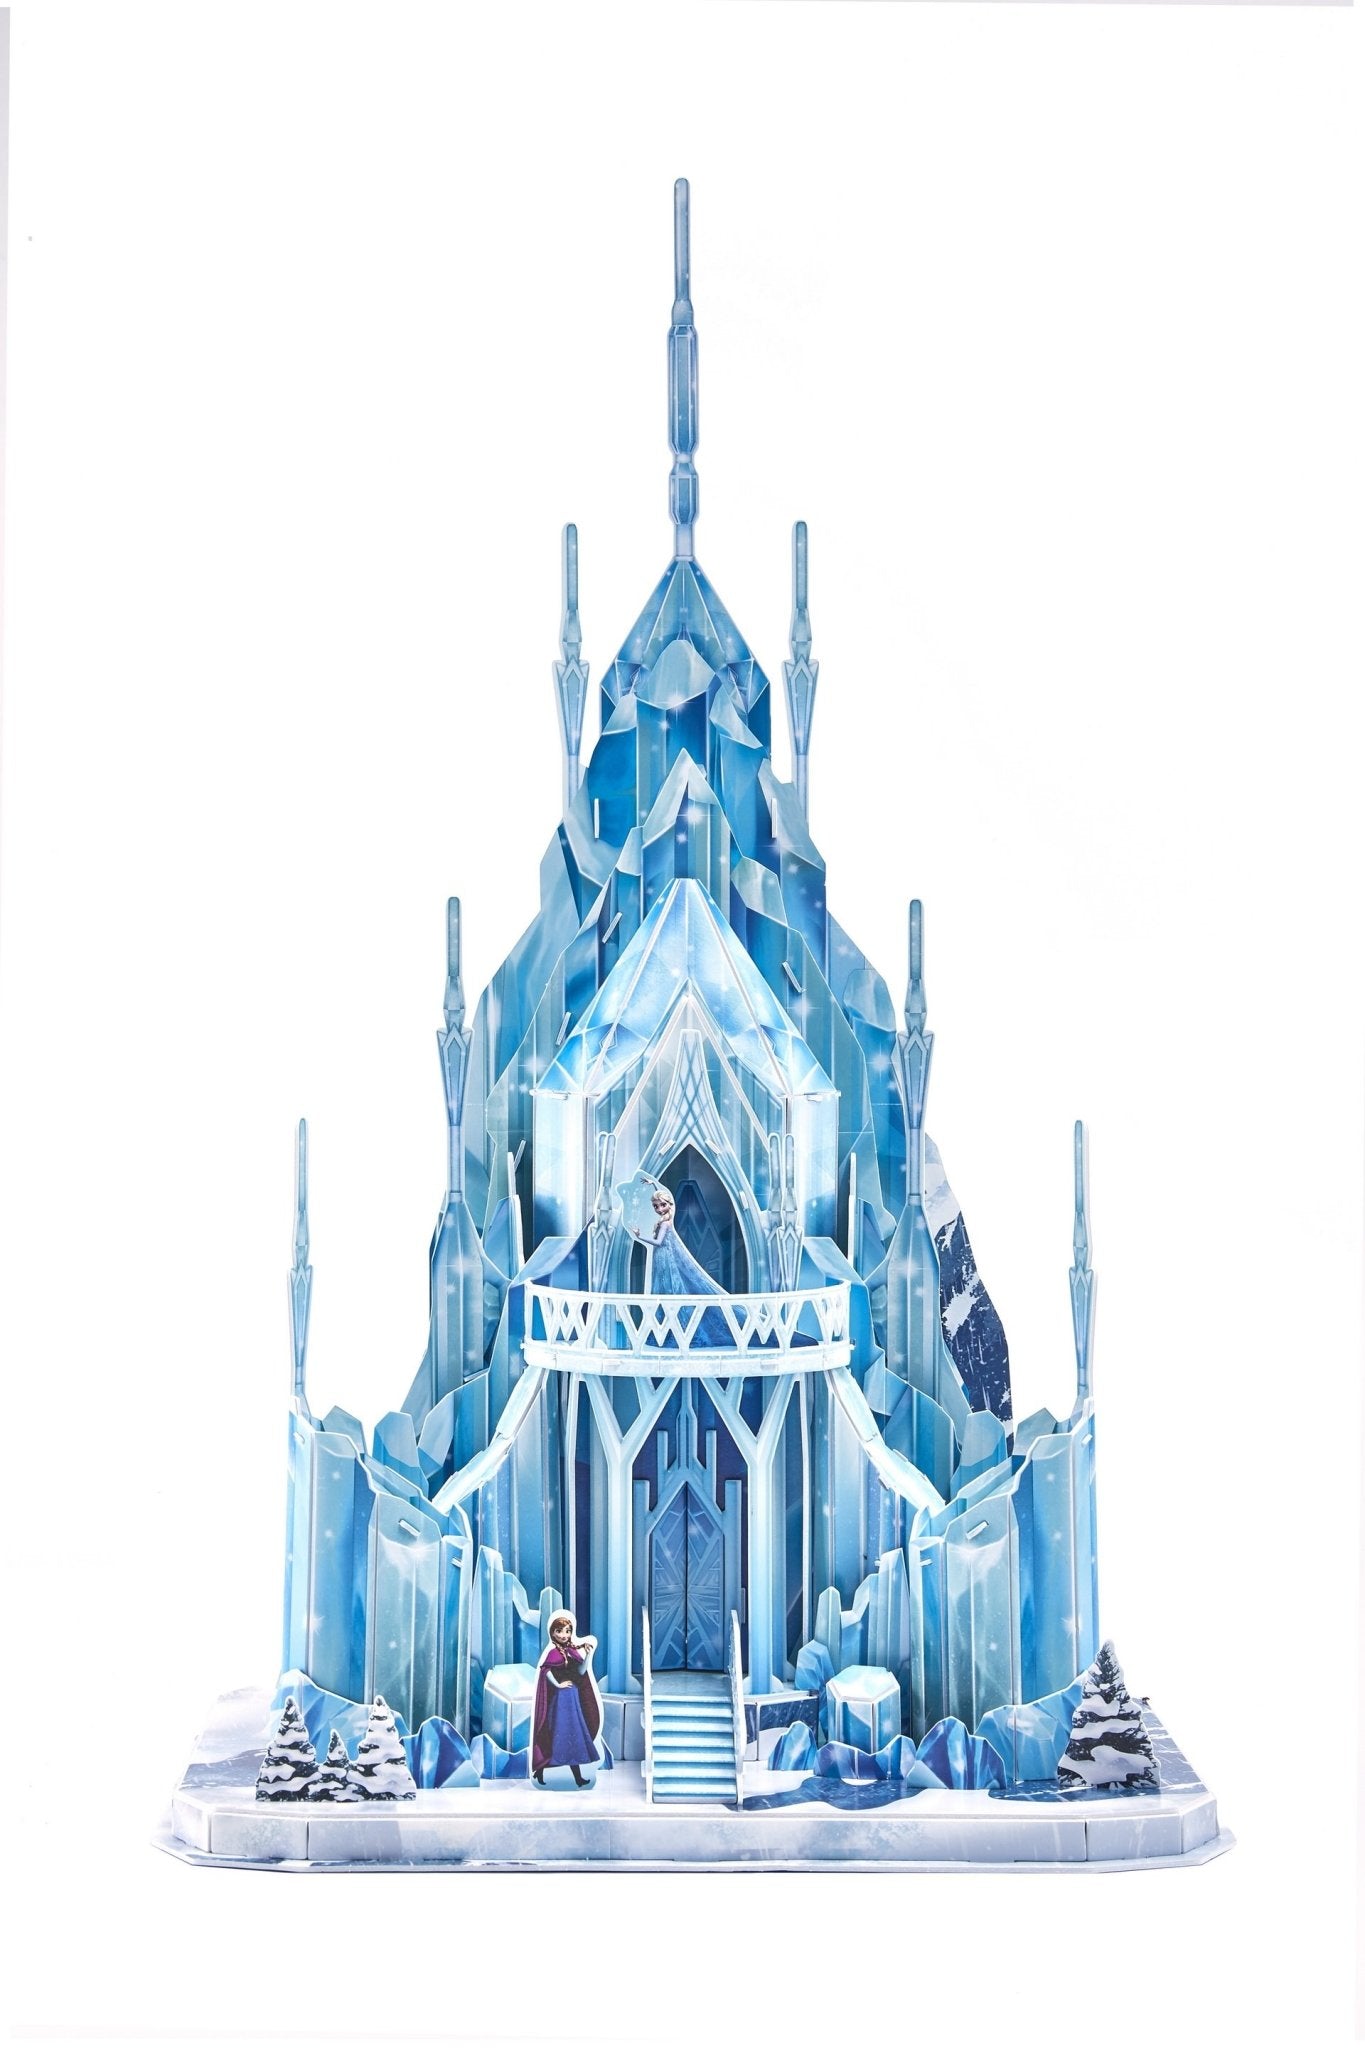 3D Puzzle: Frozen Ice Palace - 4DPuzz - 4DPuzz
